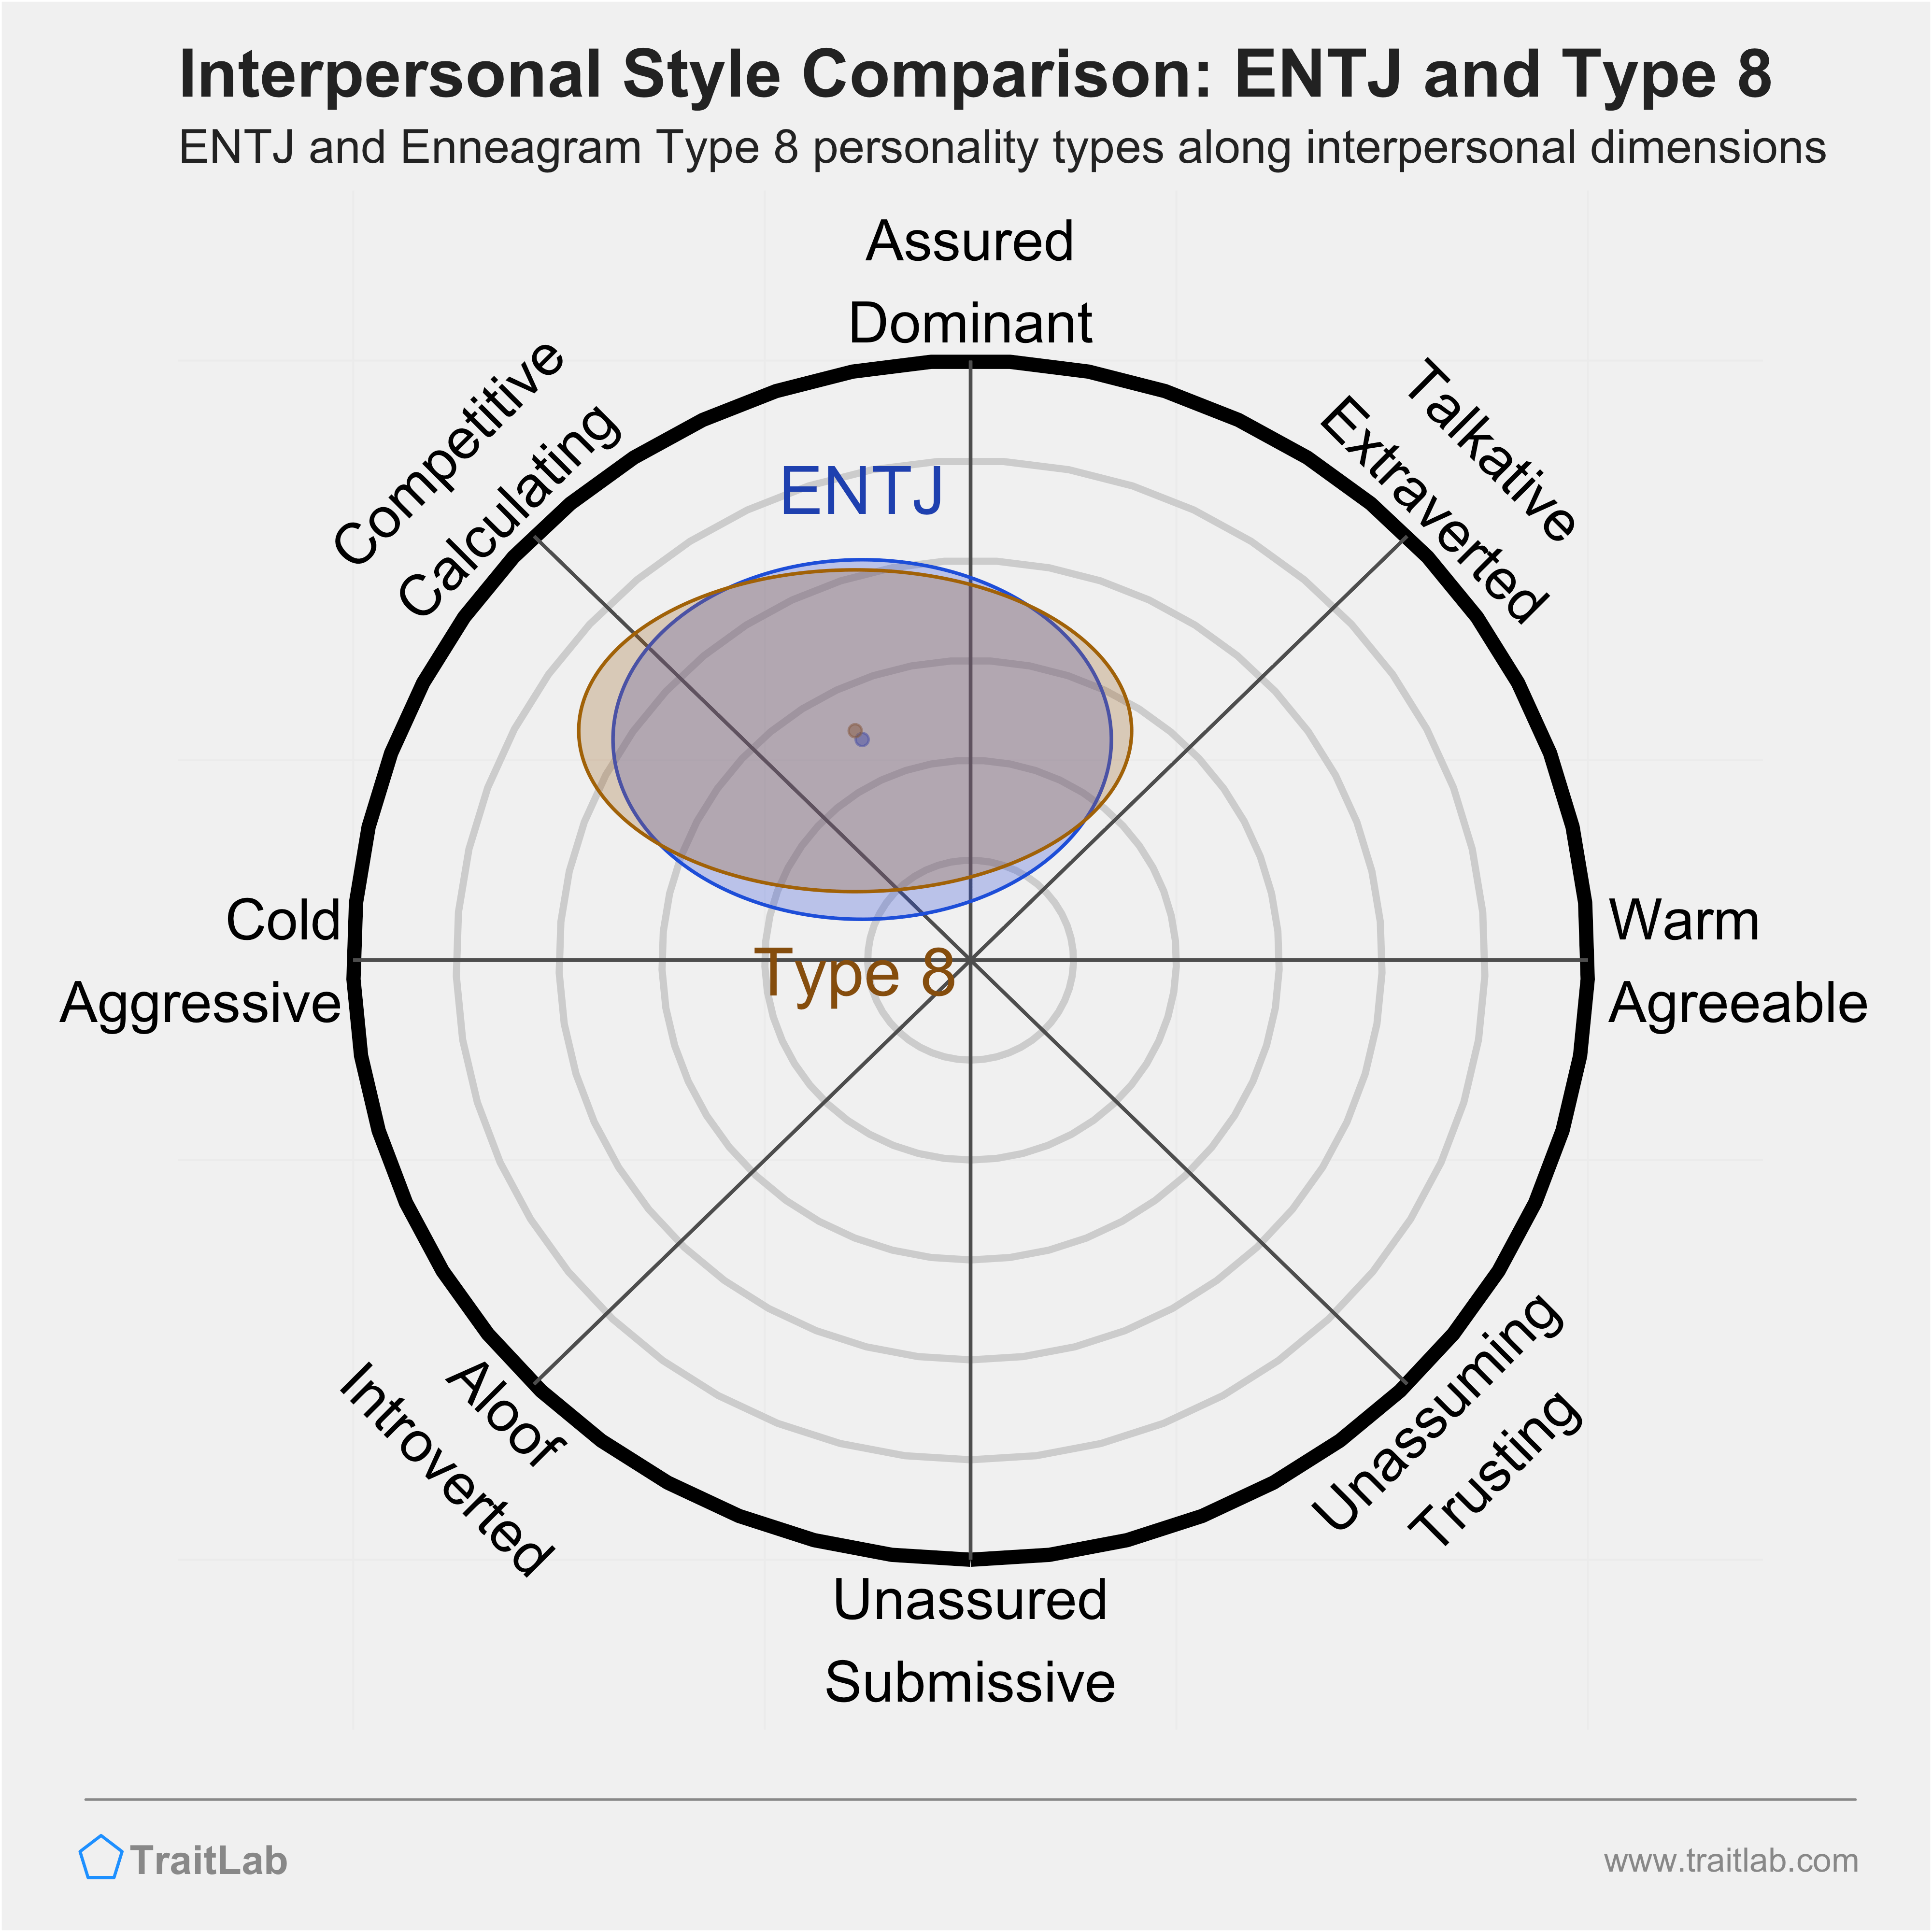 Enneagram ENTJ and Type 8 comparison across interpersonal dimensions